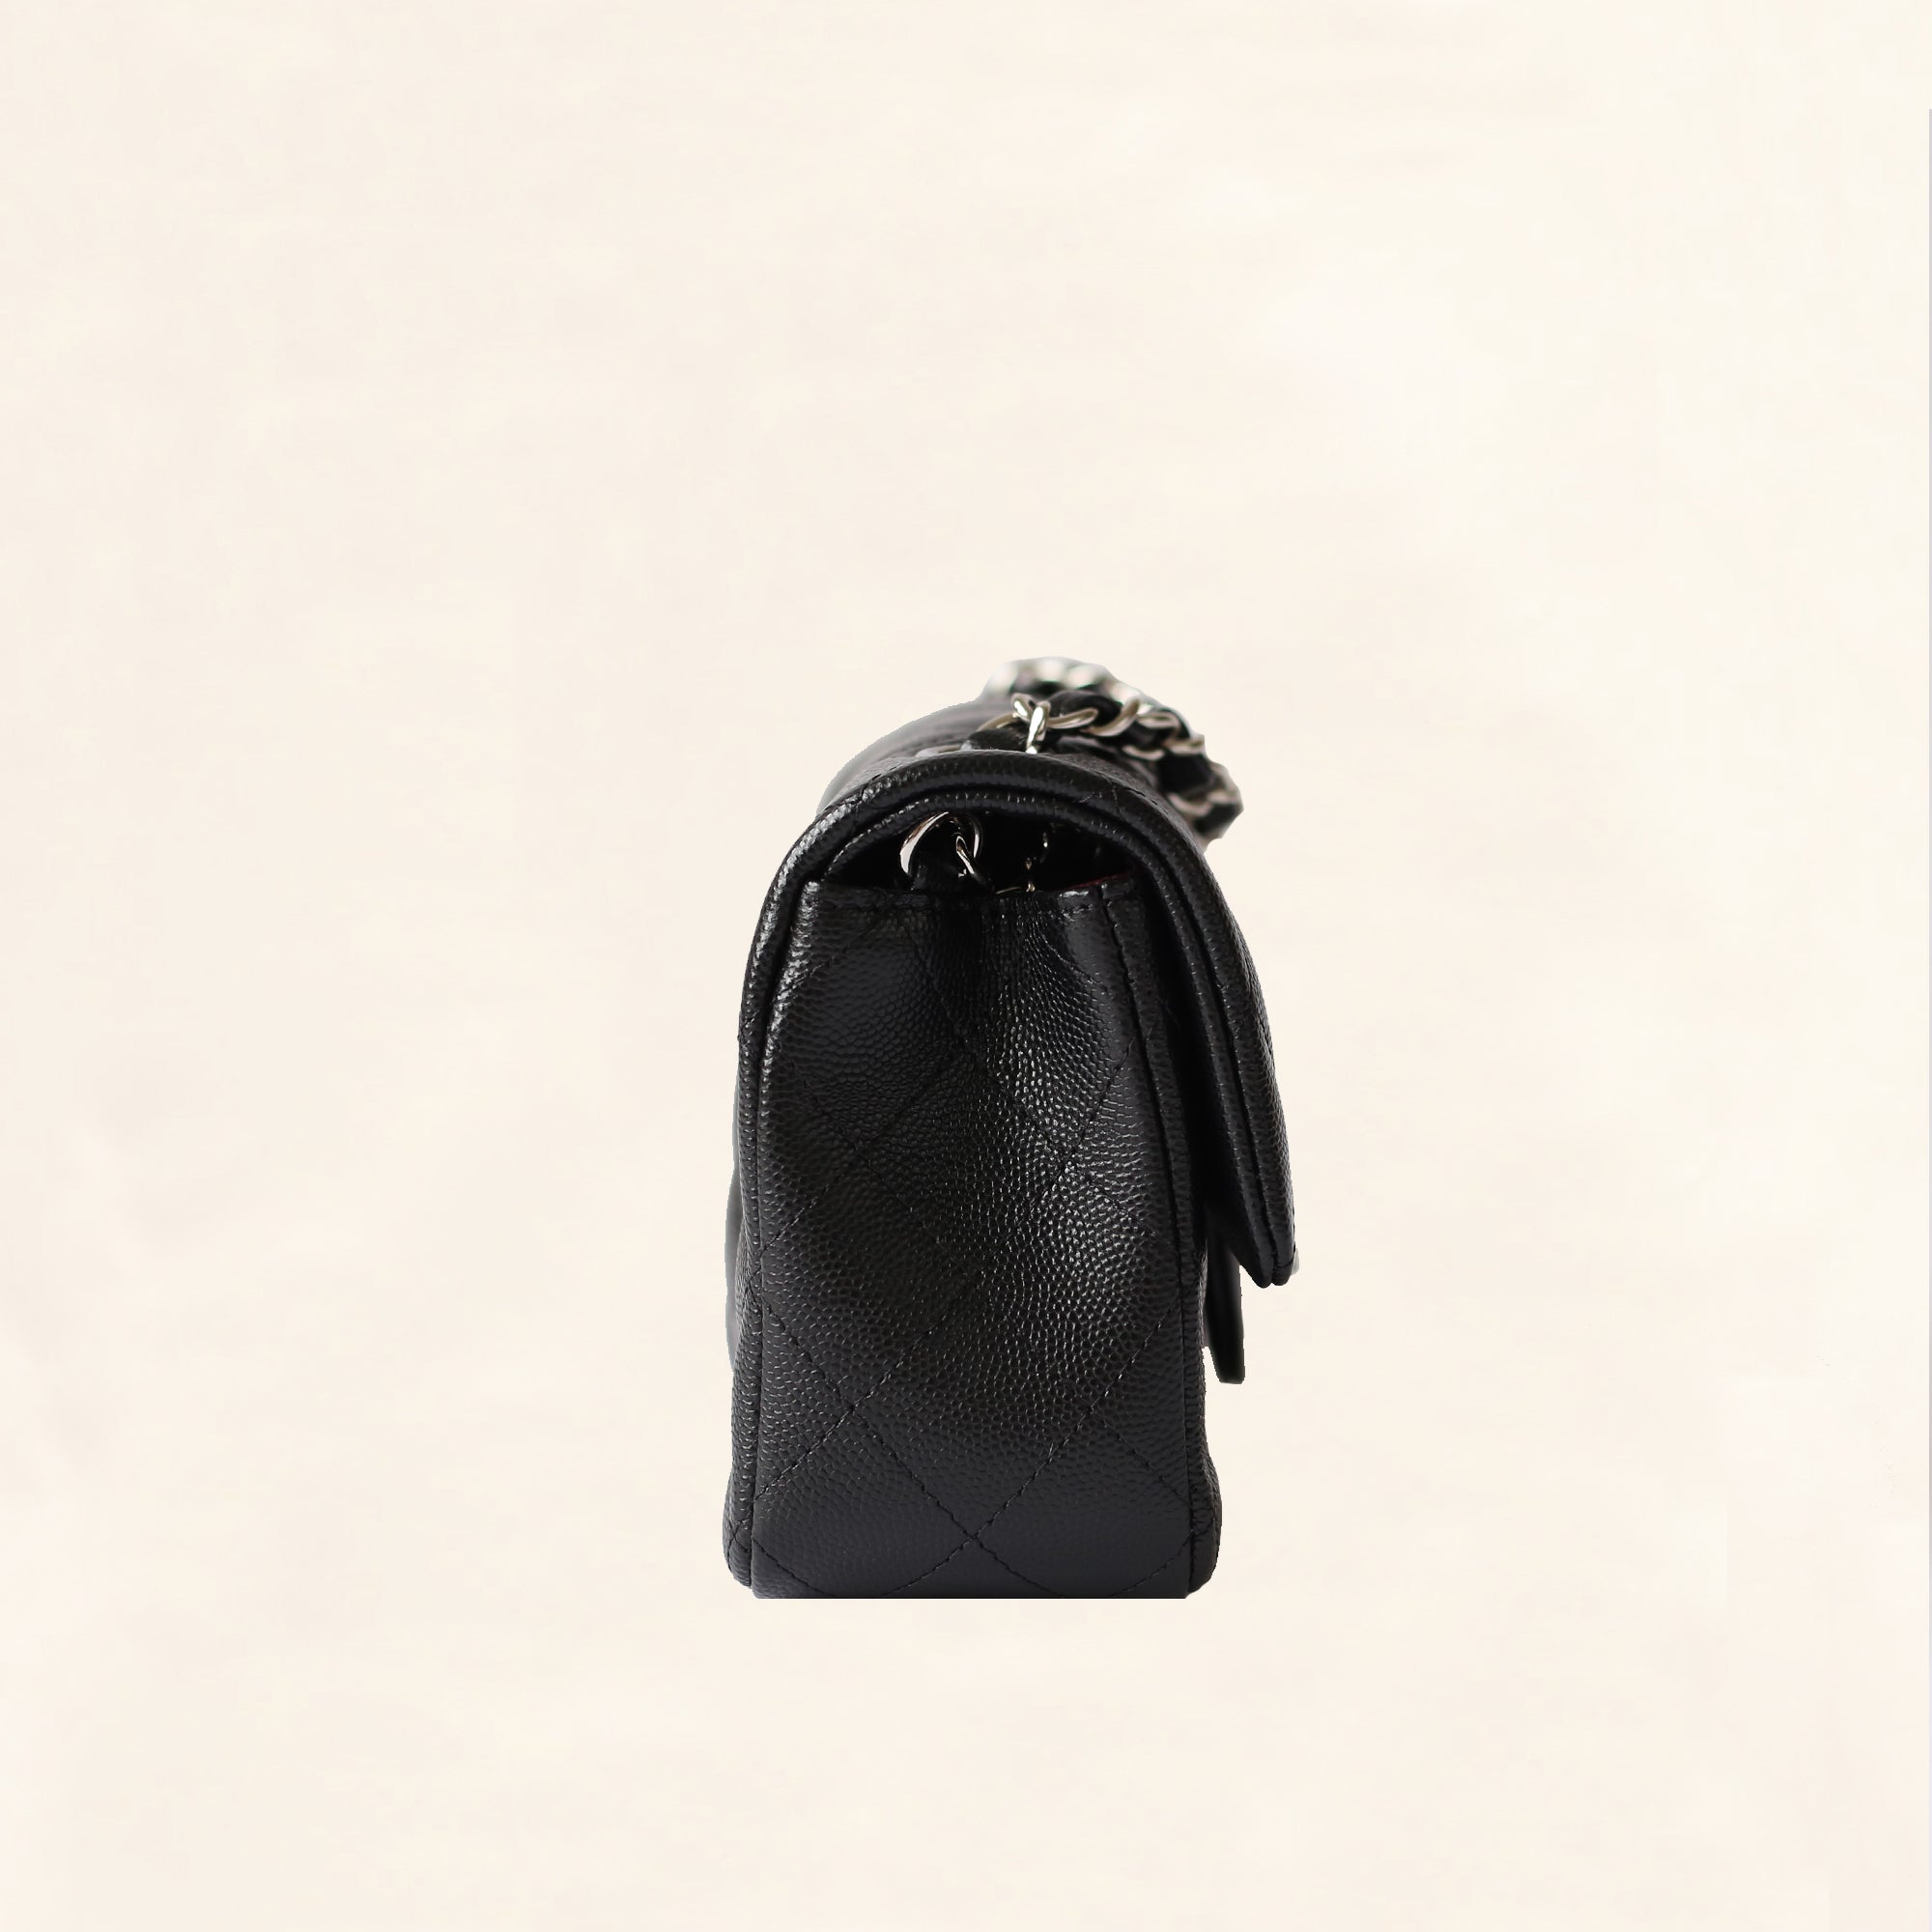 black chanel purse